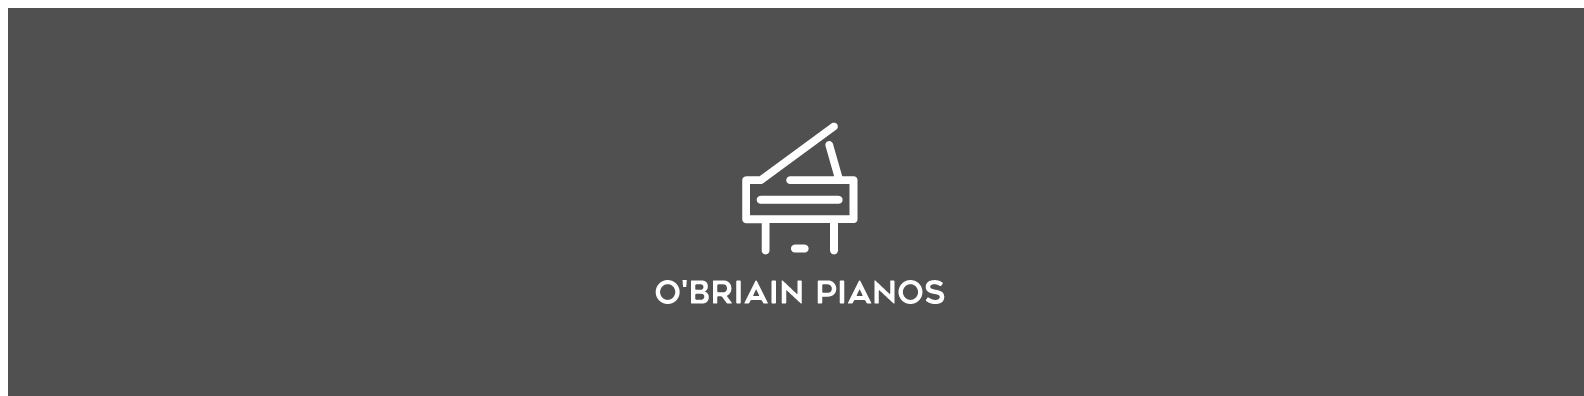 Bentley-O'Briain Pianos